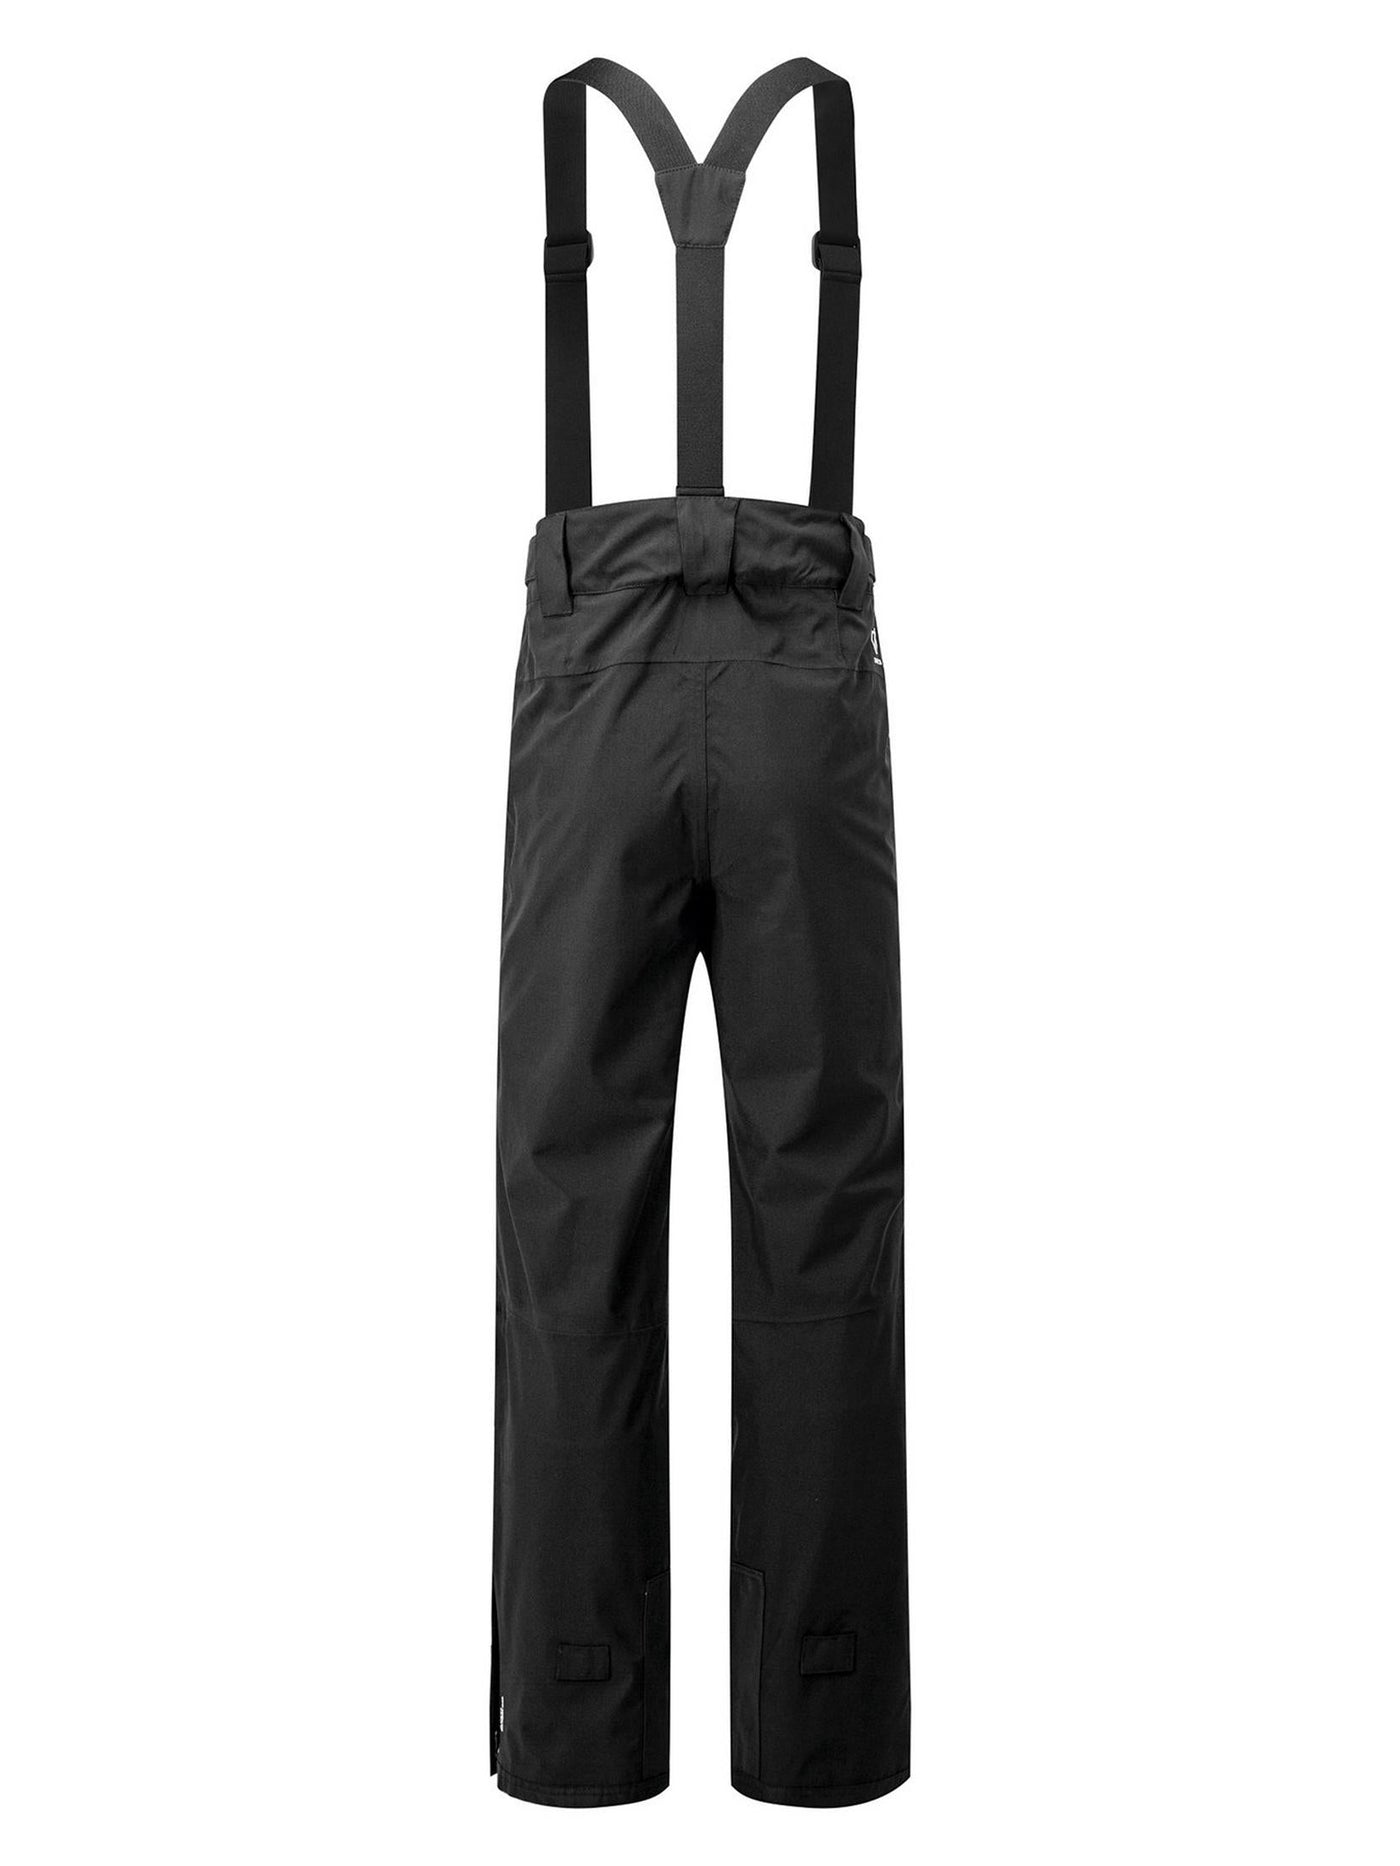 Plus Size- Dare2b Men's Achieve II Recycled Ski Pants | Black